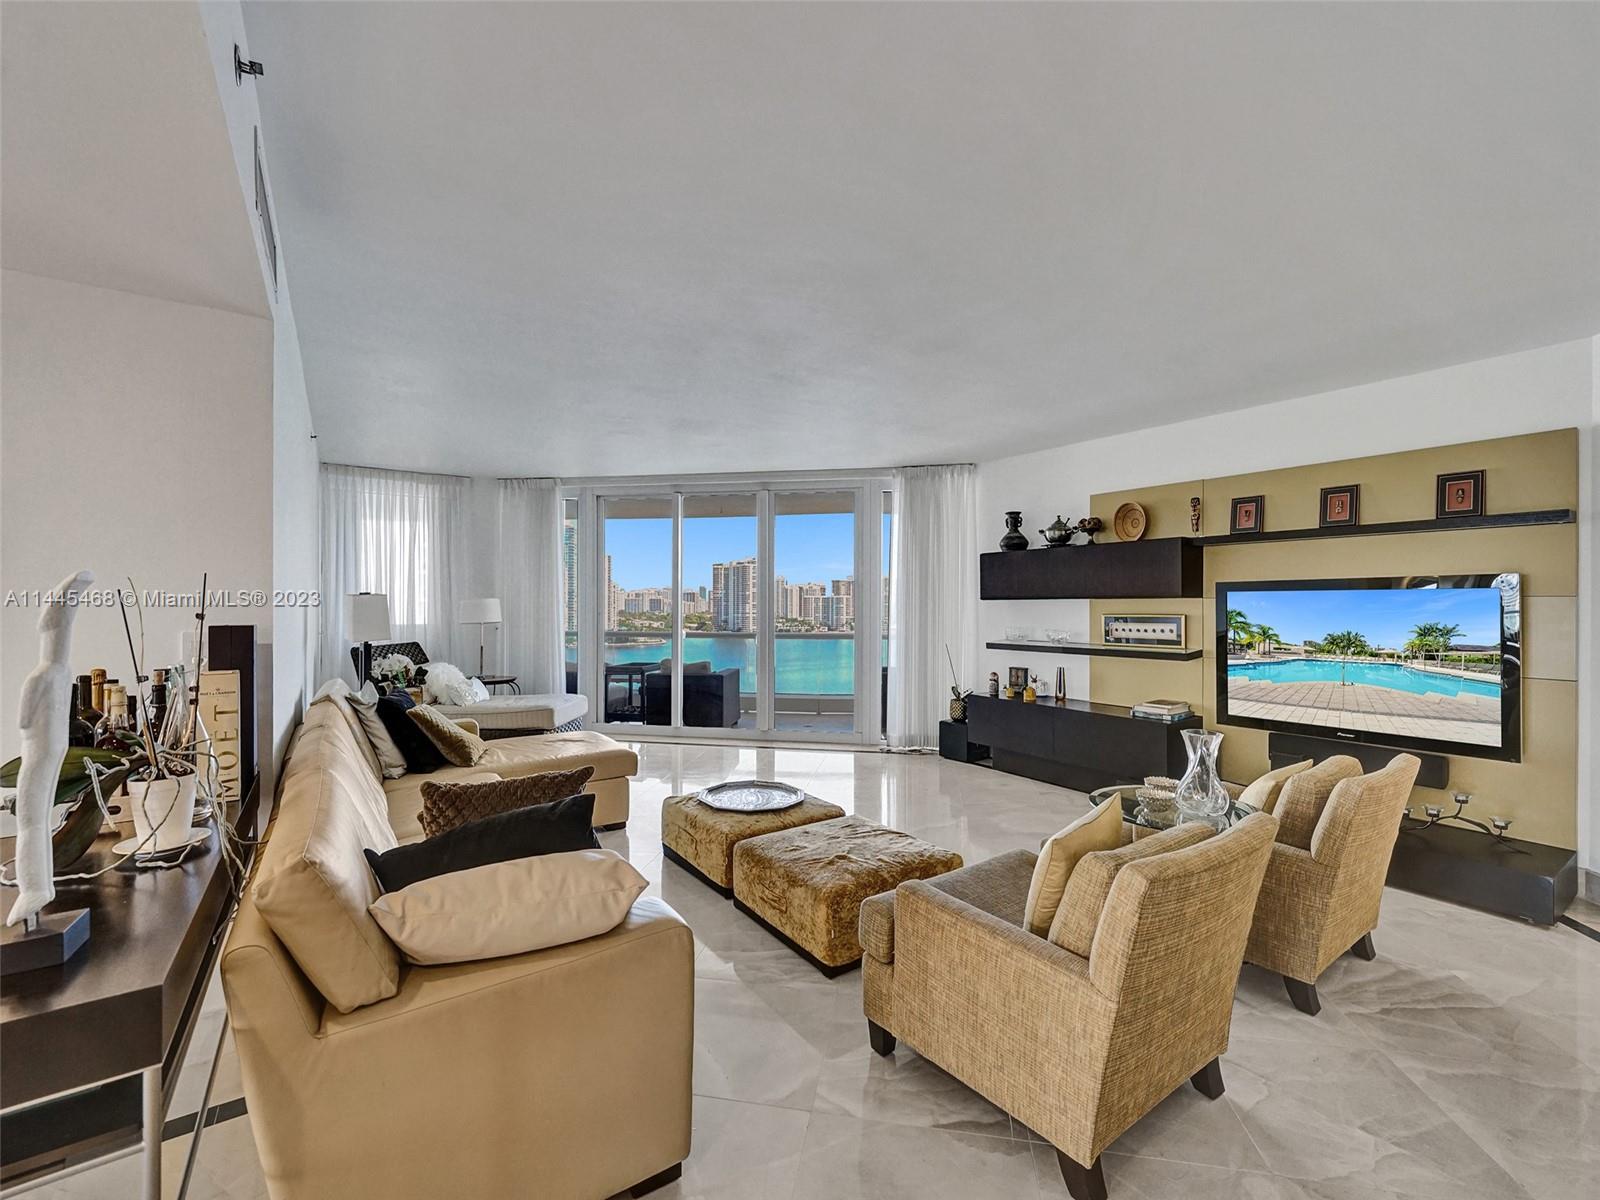 Property for Sale at 7000 Island Blvd 1207, Aventura, Miami-Dade County, Florida - Bedrooms: 4 
Bathrooms: 5  - $1,725,000